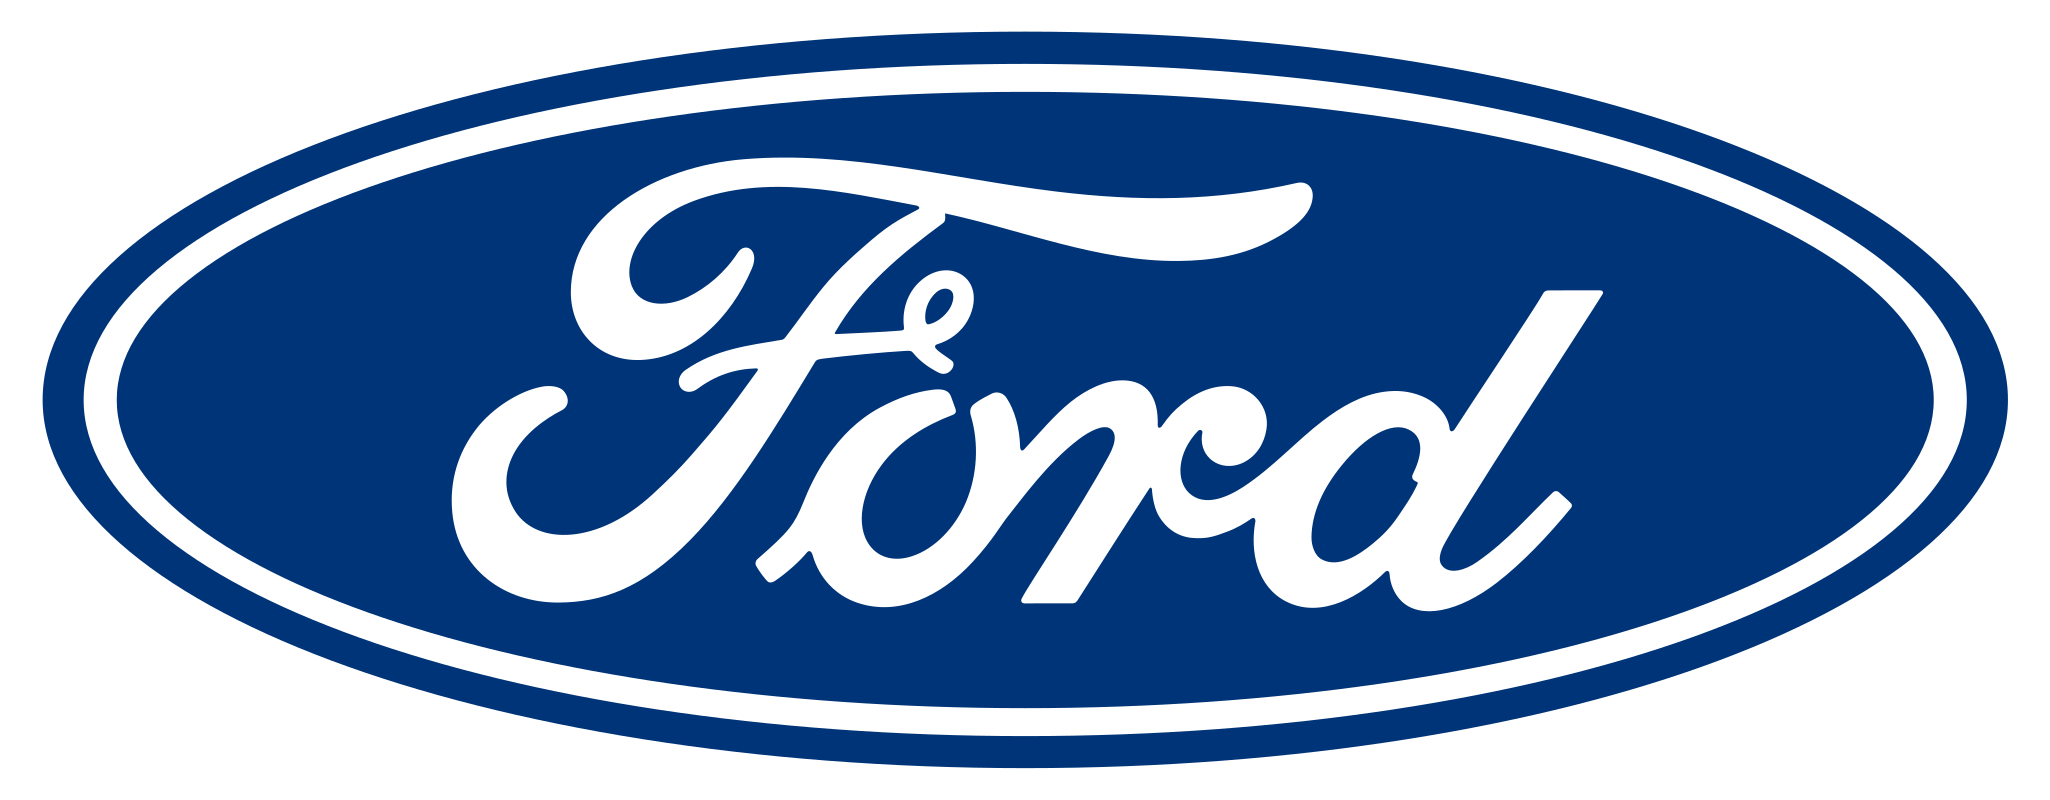 Car Logo Ford Transparent Png